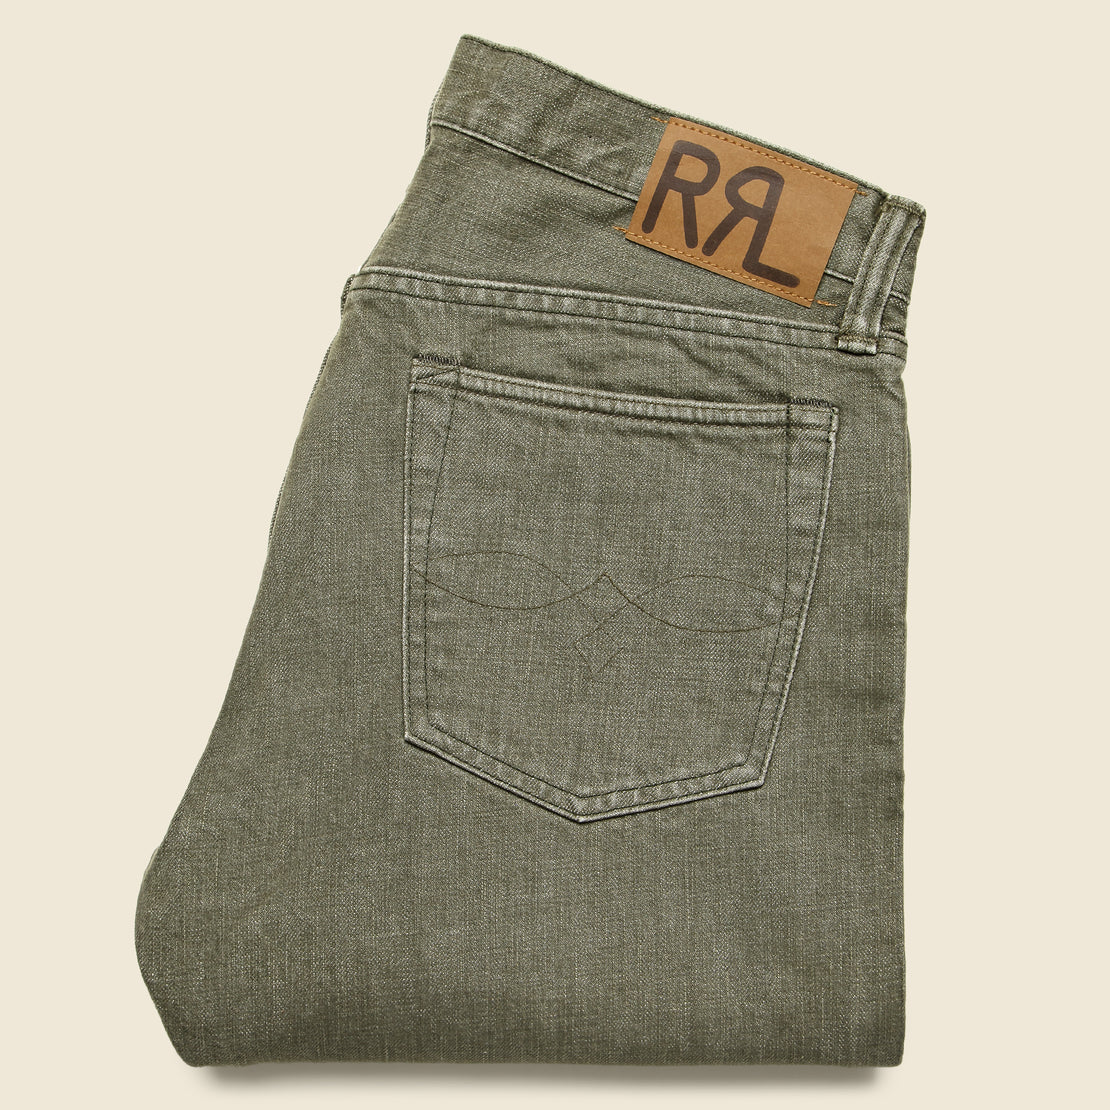 Slim Fit Jean - Olive - RRL - STAG Provisions - Pants - Denim